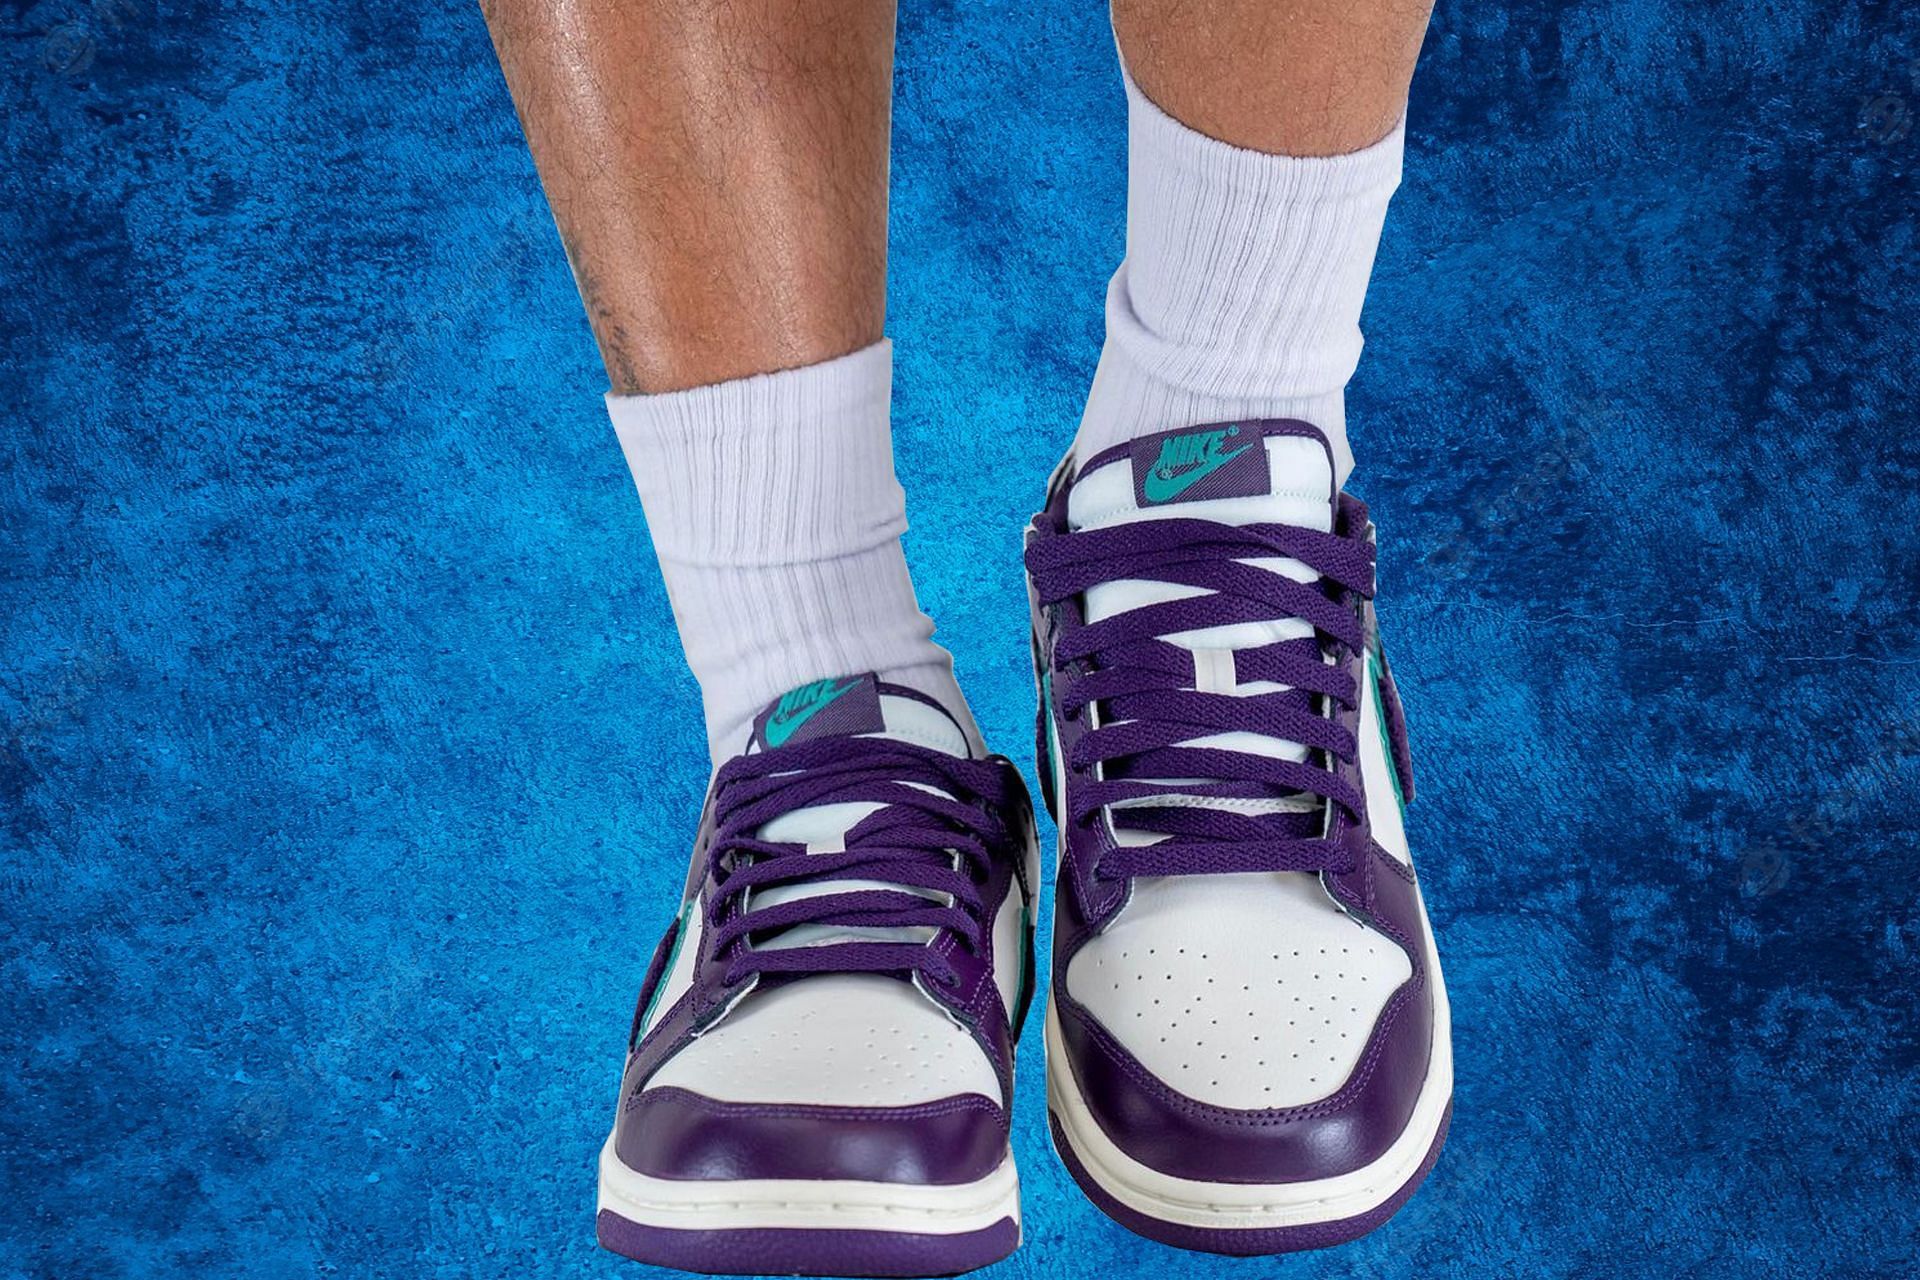 Nike Dunk Low Chenille Swoosh Grand Purple (Image via @yankeekicks / Instagram)